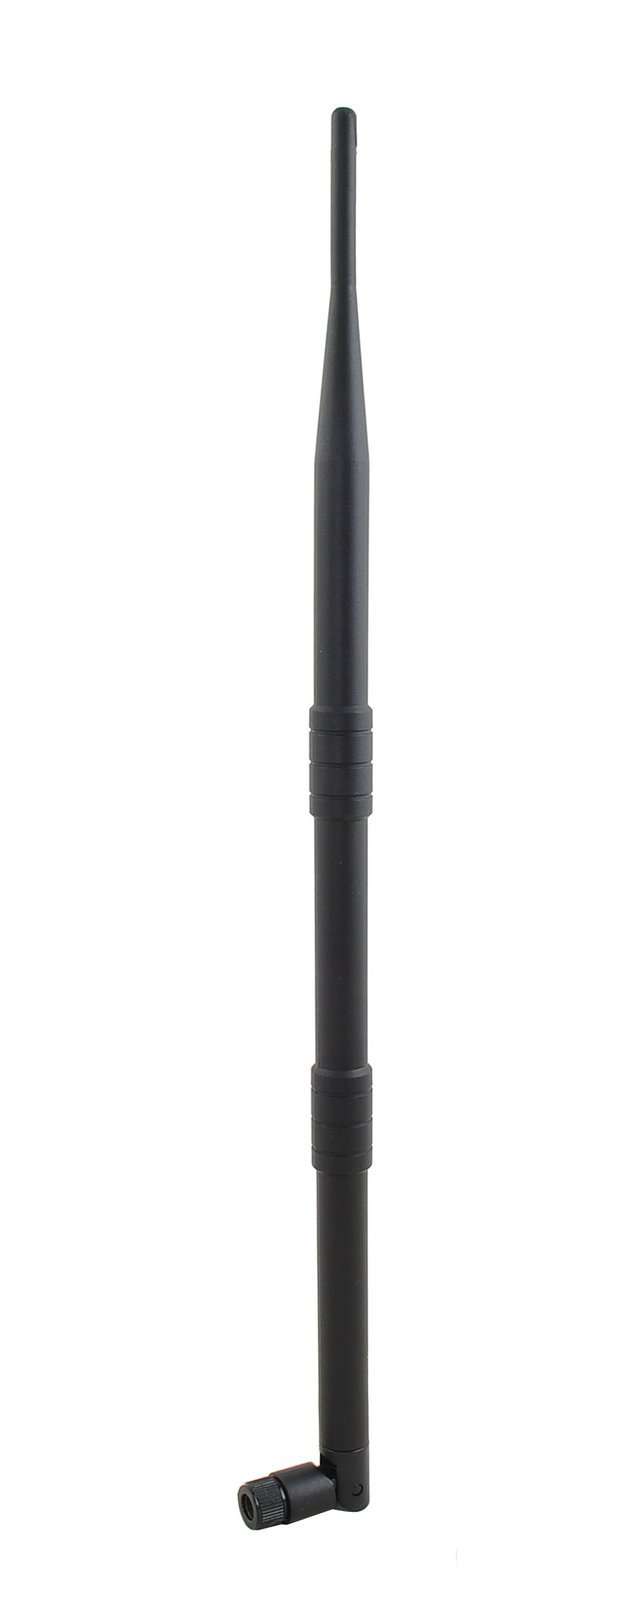 Univerzalis-WIFI-antenna-RP-SMA-csatlakozo-35-cm-fekete-BB-0186-6